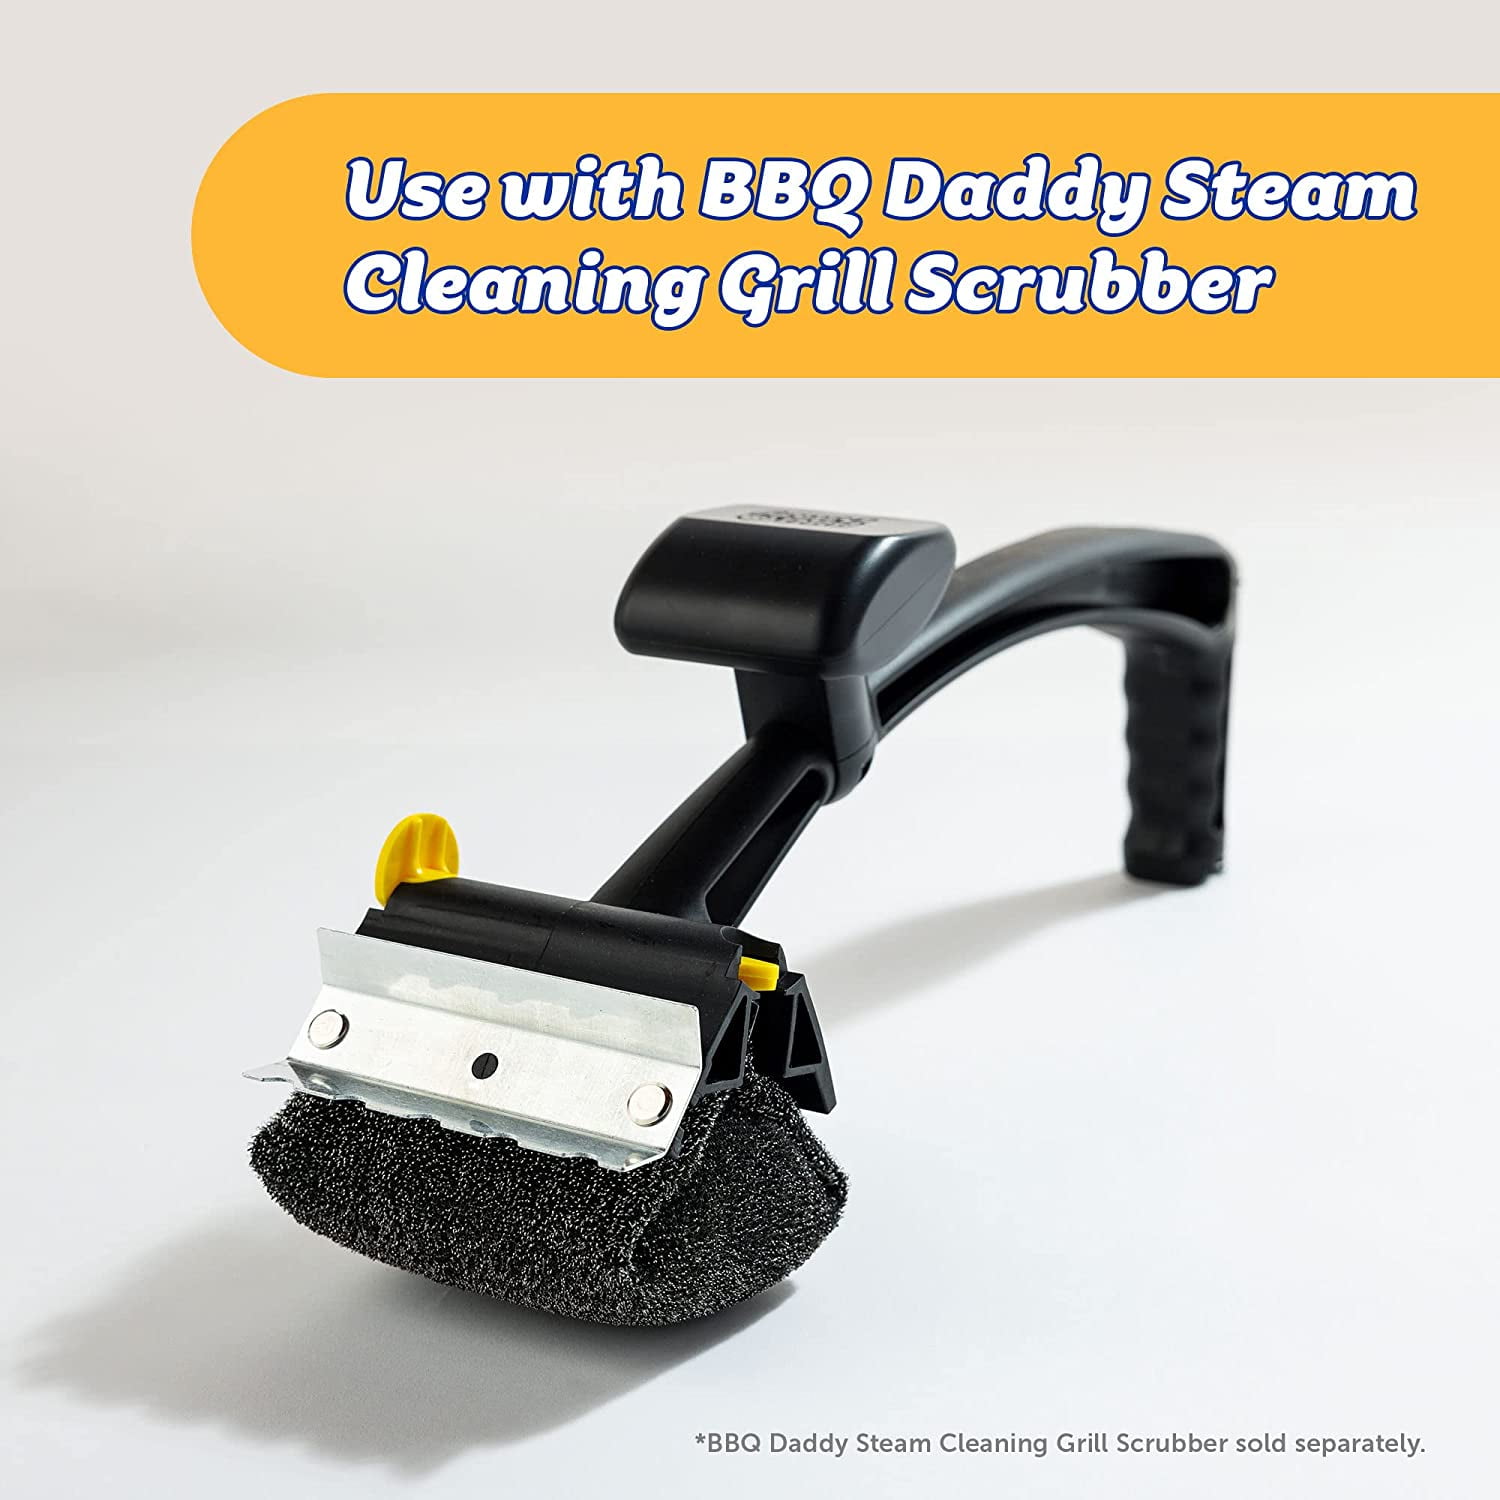 Scrub Daddy BBQ Steam Cleaning Grill Scrubber Refill Head, 1 ct